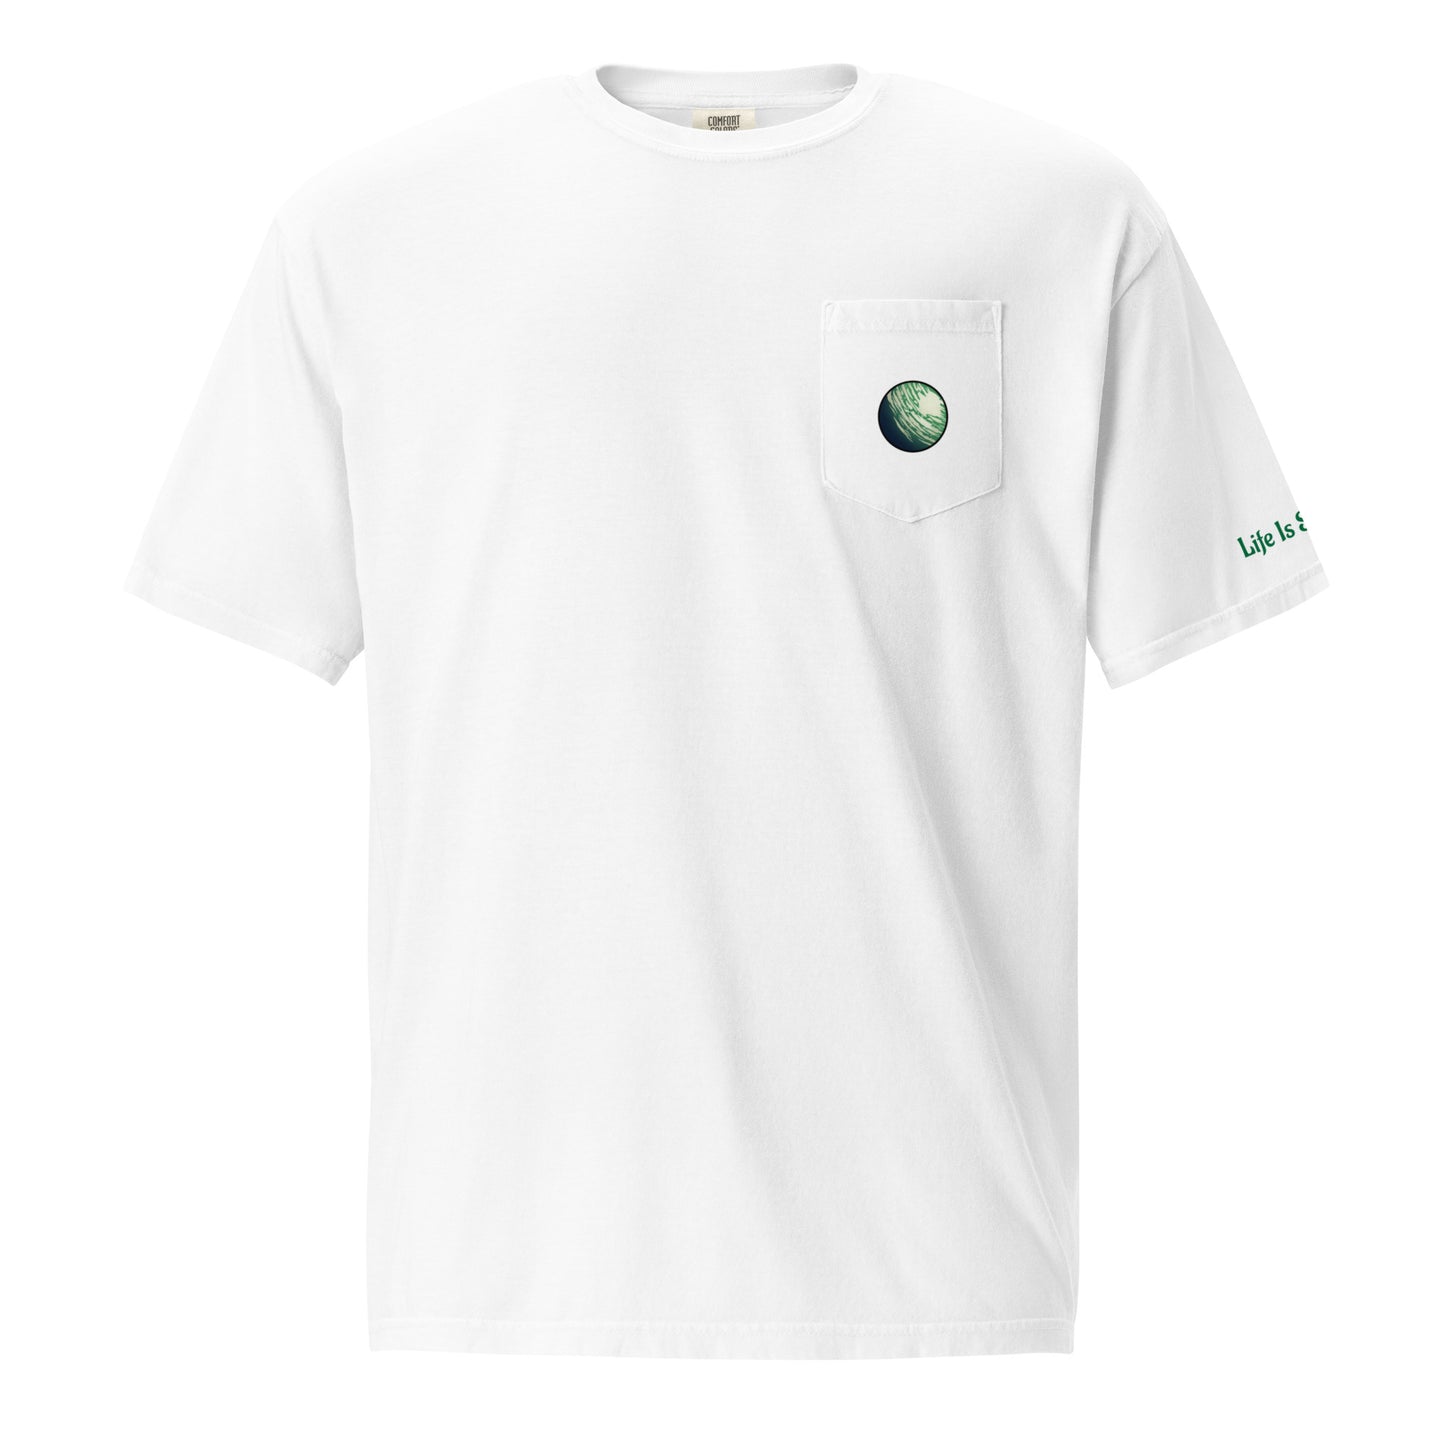 L.I.S Planet Pocket T Shirt